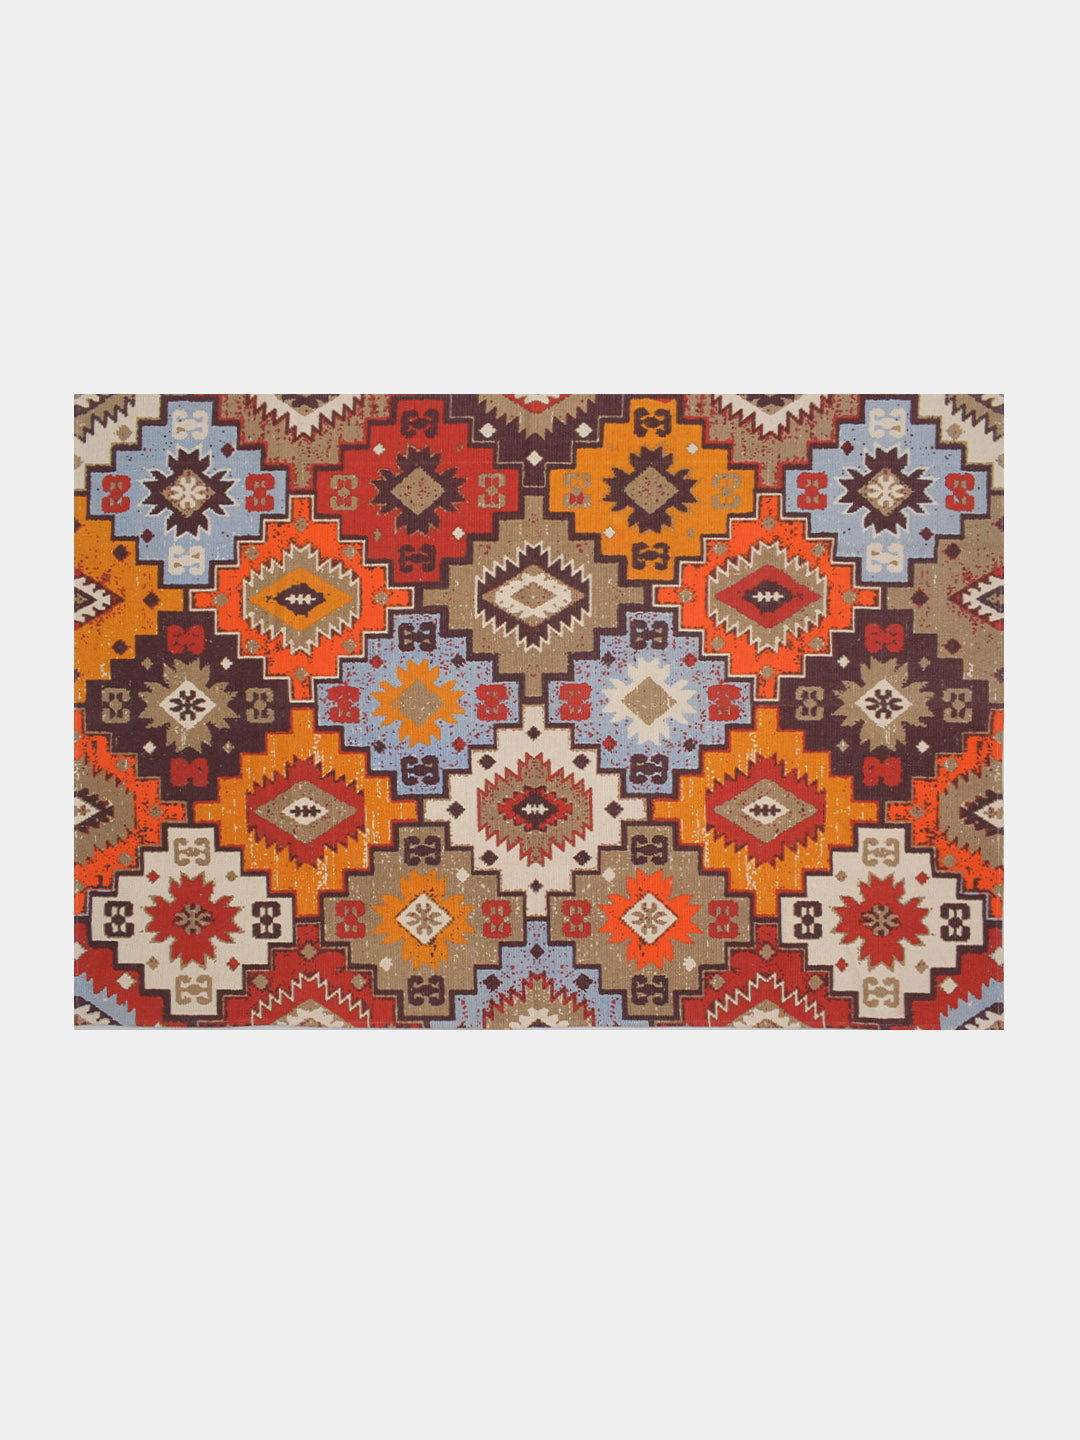 Blanc9 Morocco Printed "4x5.4 ft." Cotton Carpet